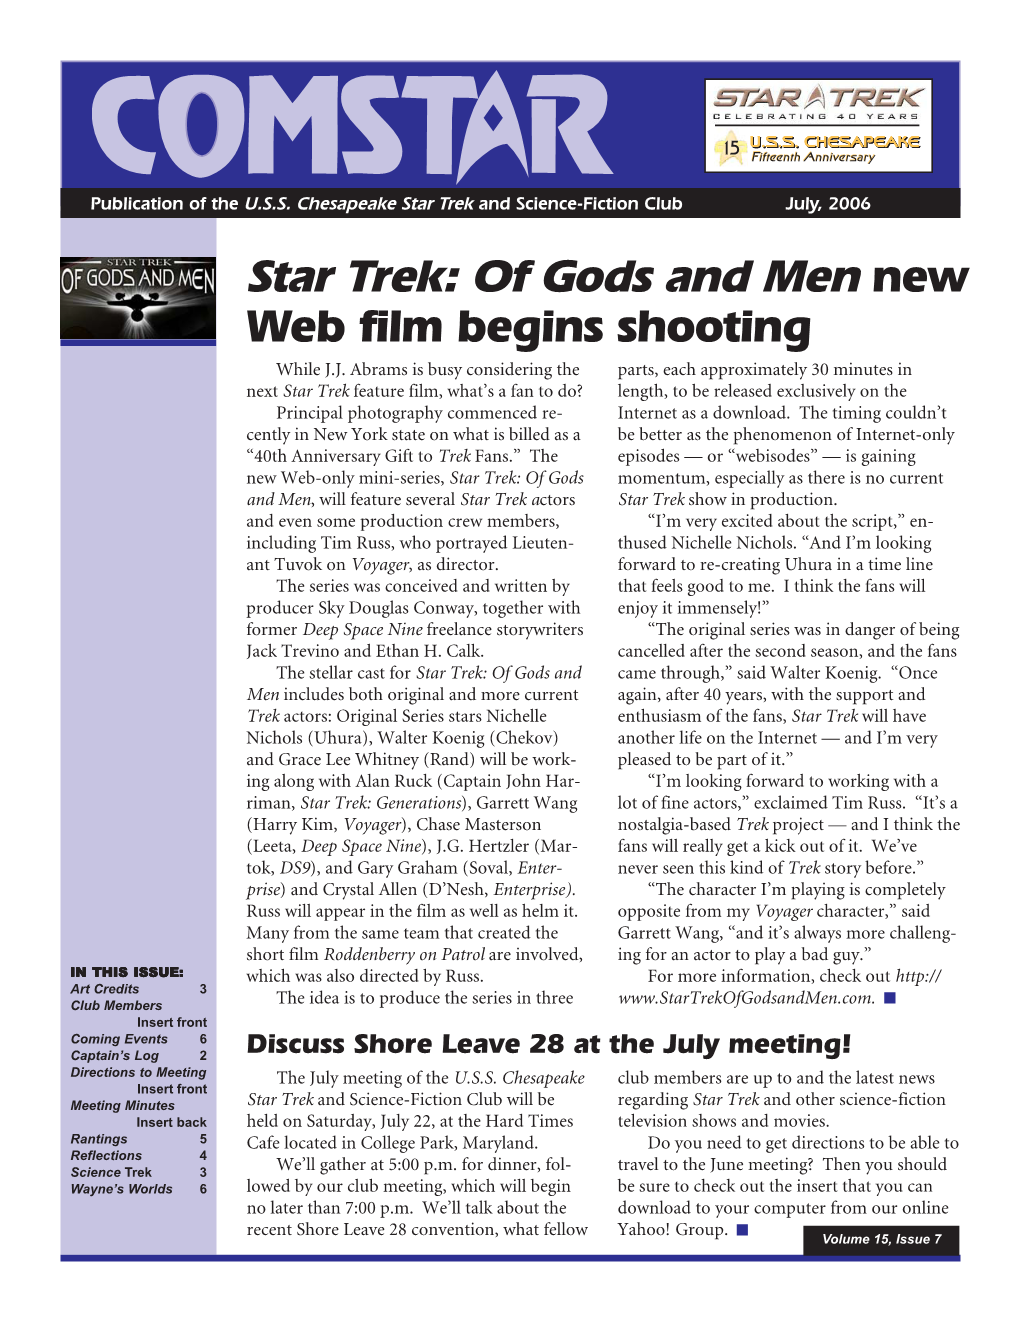 Star Trek and Science-Fiction Club July, 2006 Star Trek: of Gods and Men New Web Film Begins Shooting While J.J